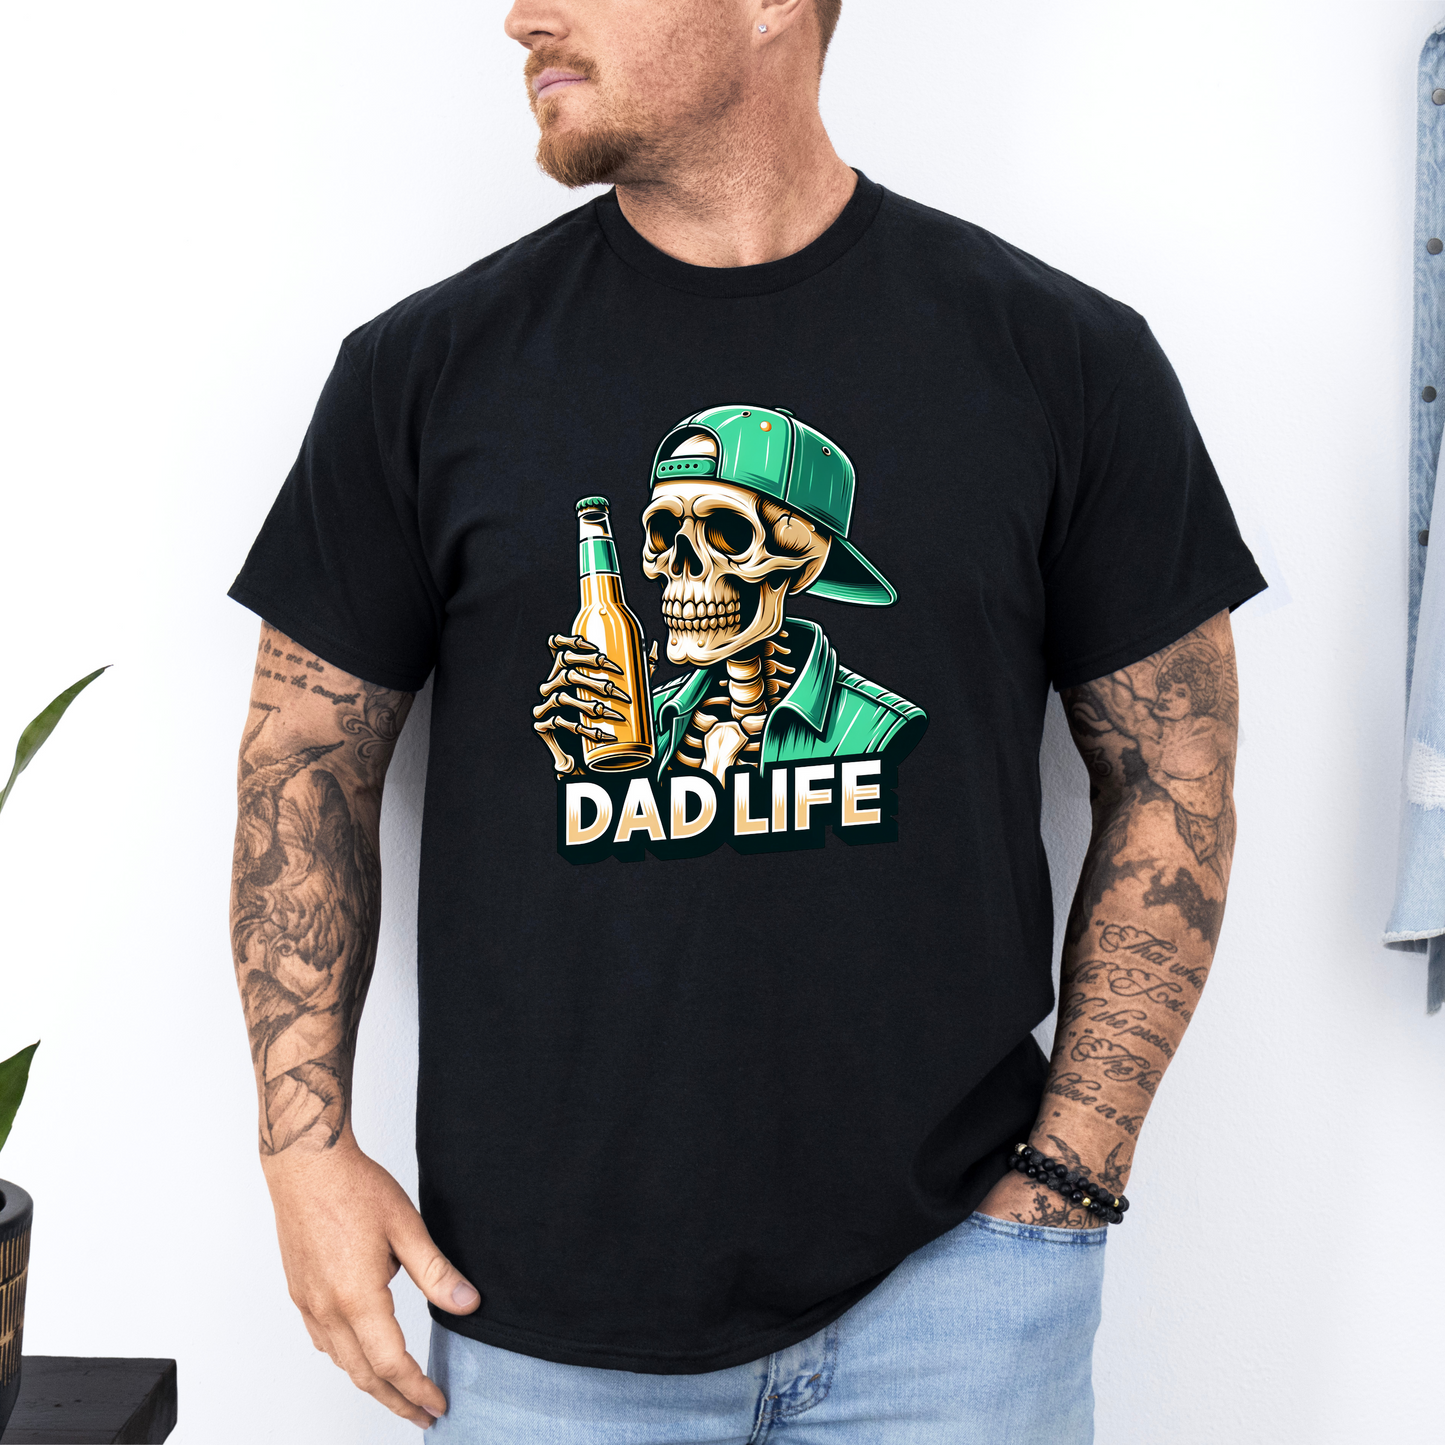 Dad life (beer bottle) shirt/sweatshirt